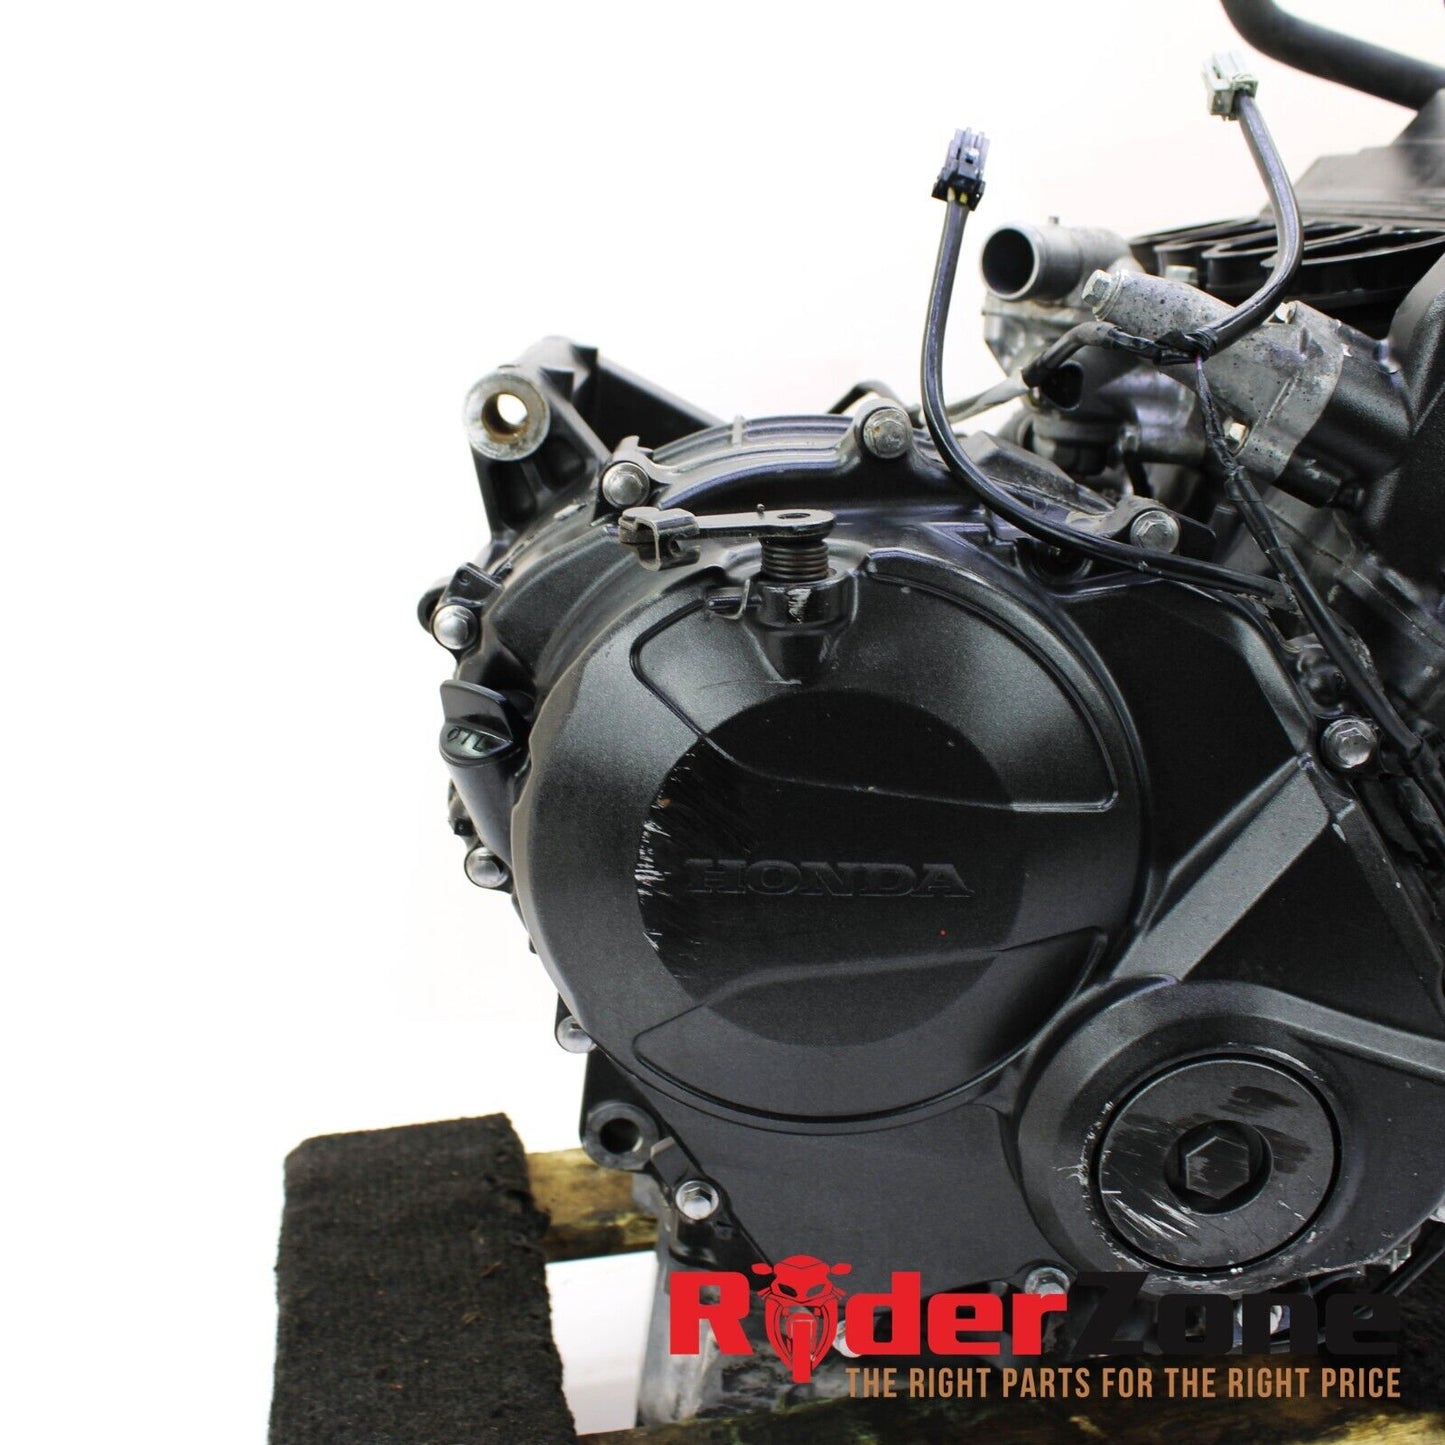 2007 - 2012 HONDA CBR600RR ENGINE MOTOR COMPLETE KIT HEAD *30 DAY WARRANTY*